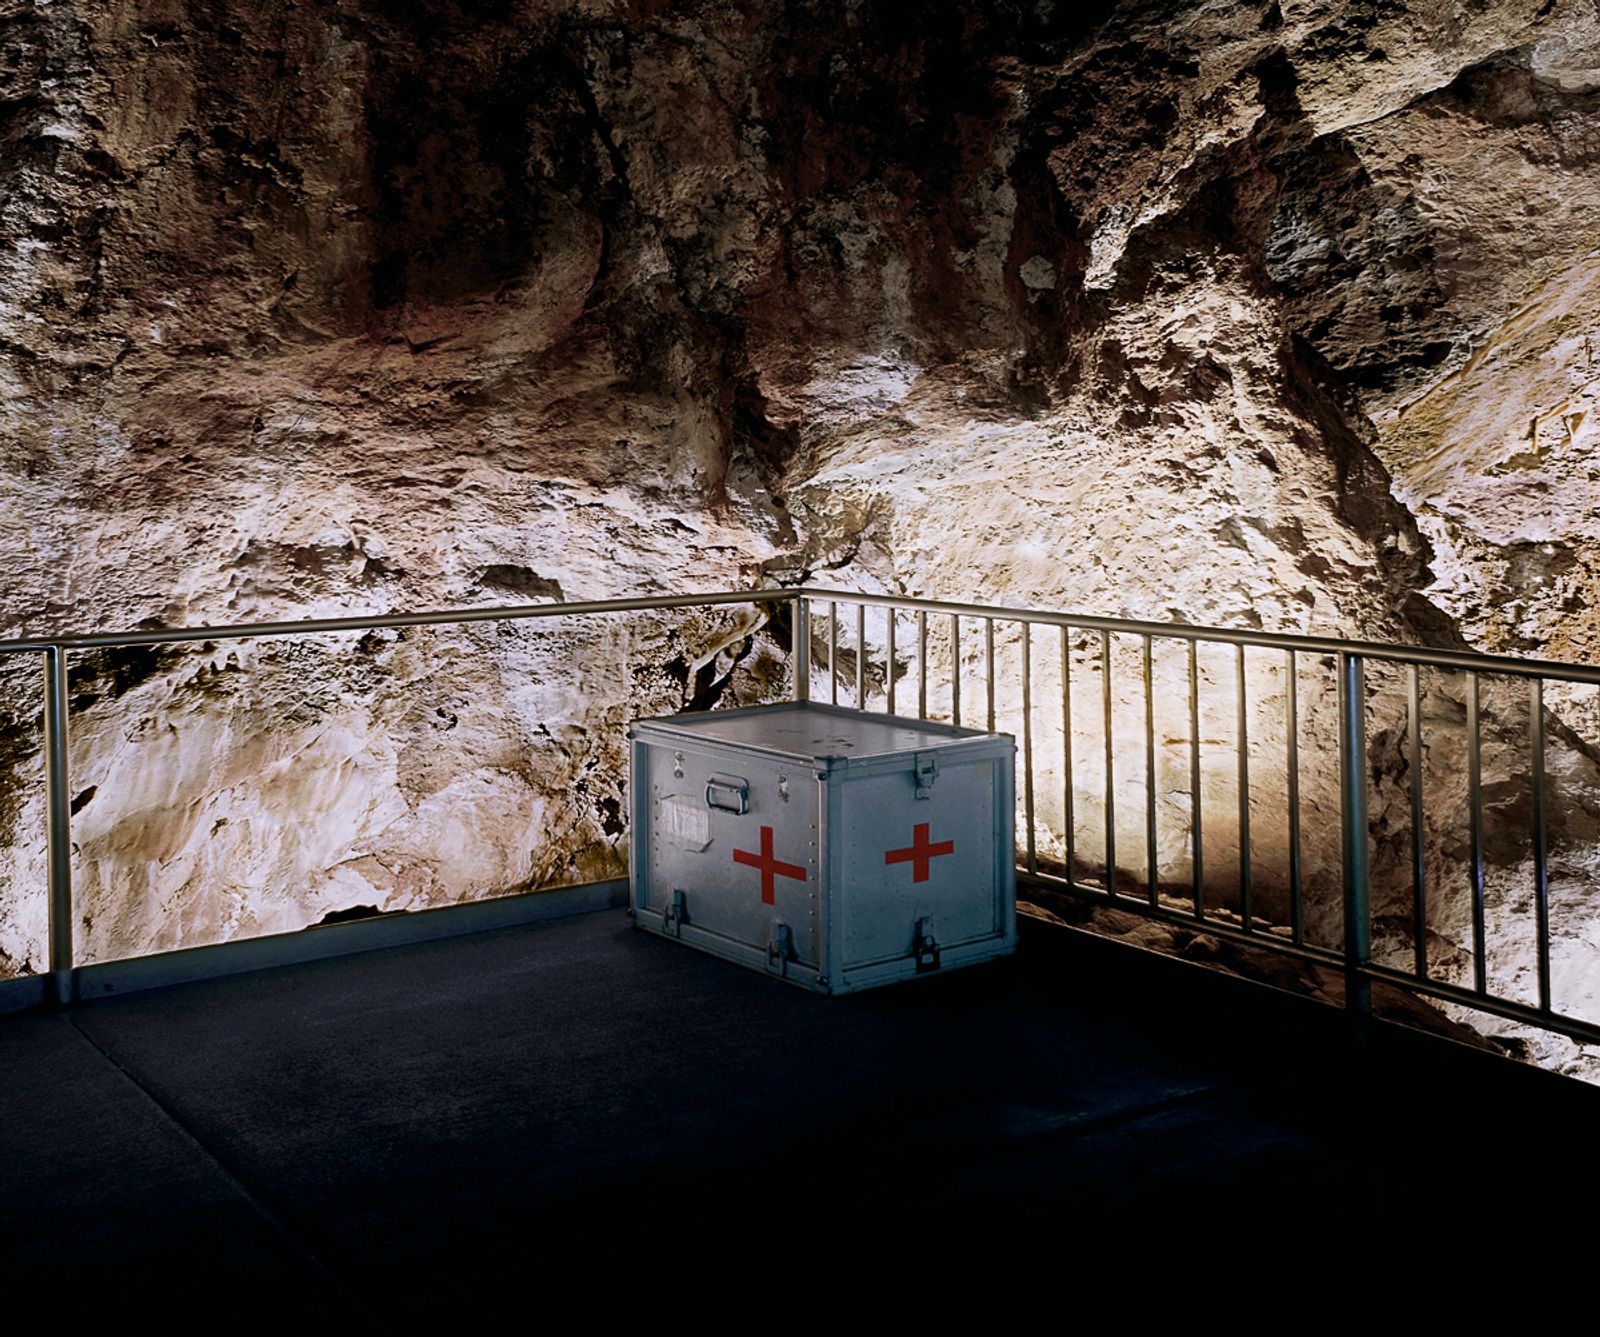 © Austin Irving - Medic Box, Glenwood Caverns, Glenwood Springs, Colorado, USA, 2020